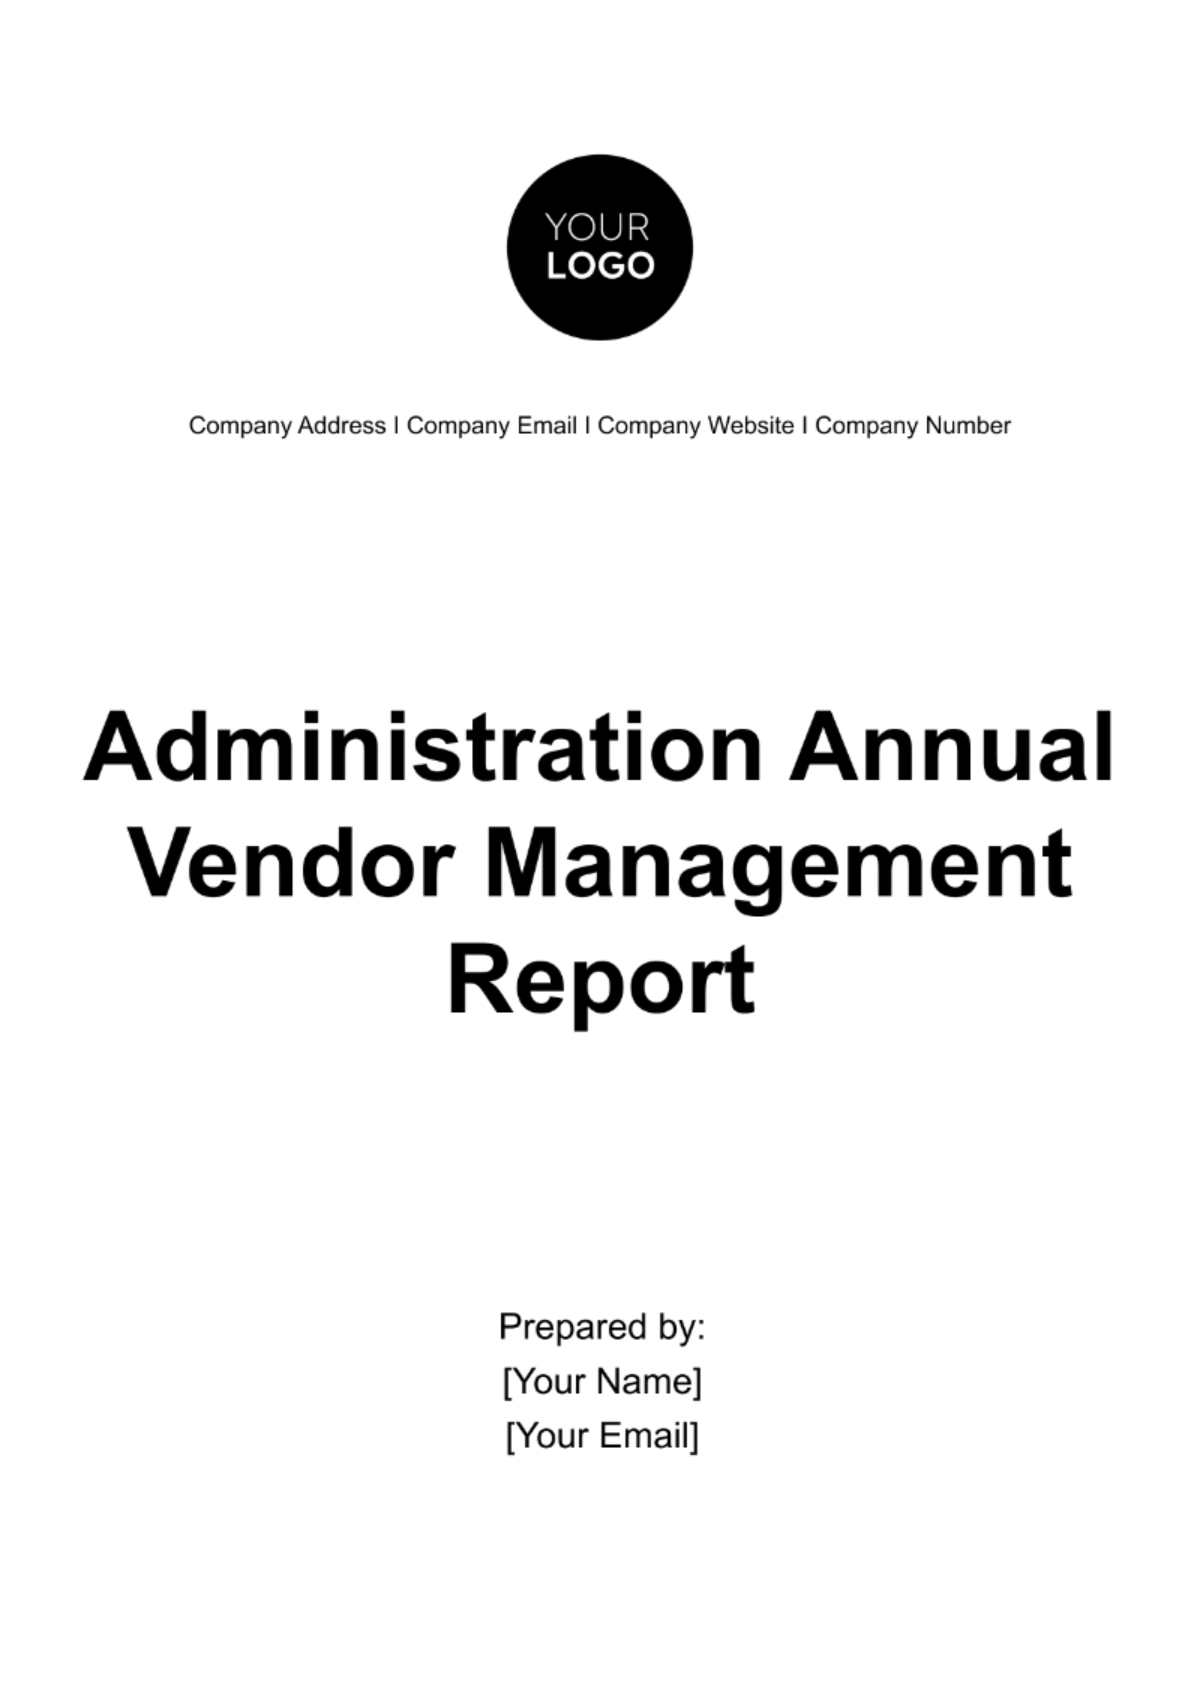 Administration Annual Vendor Management Report Template